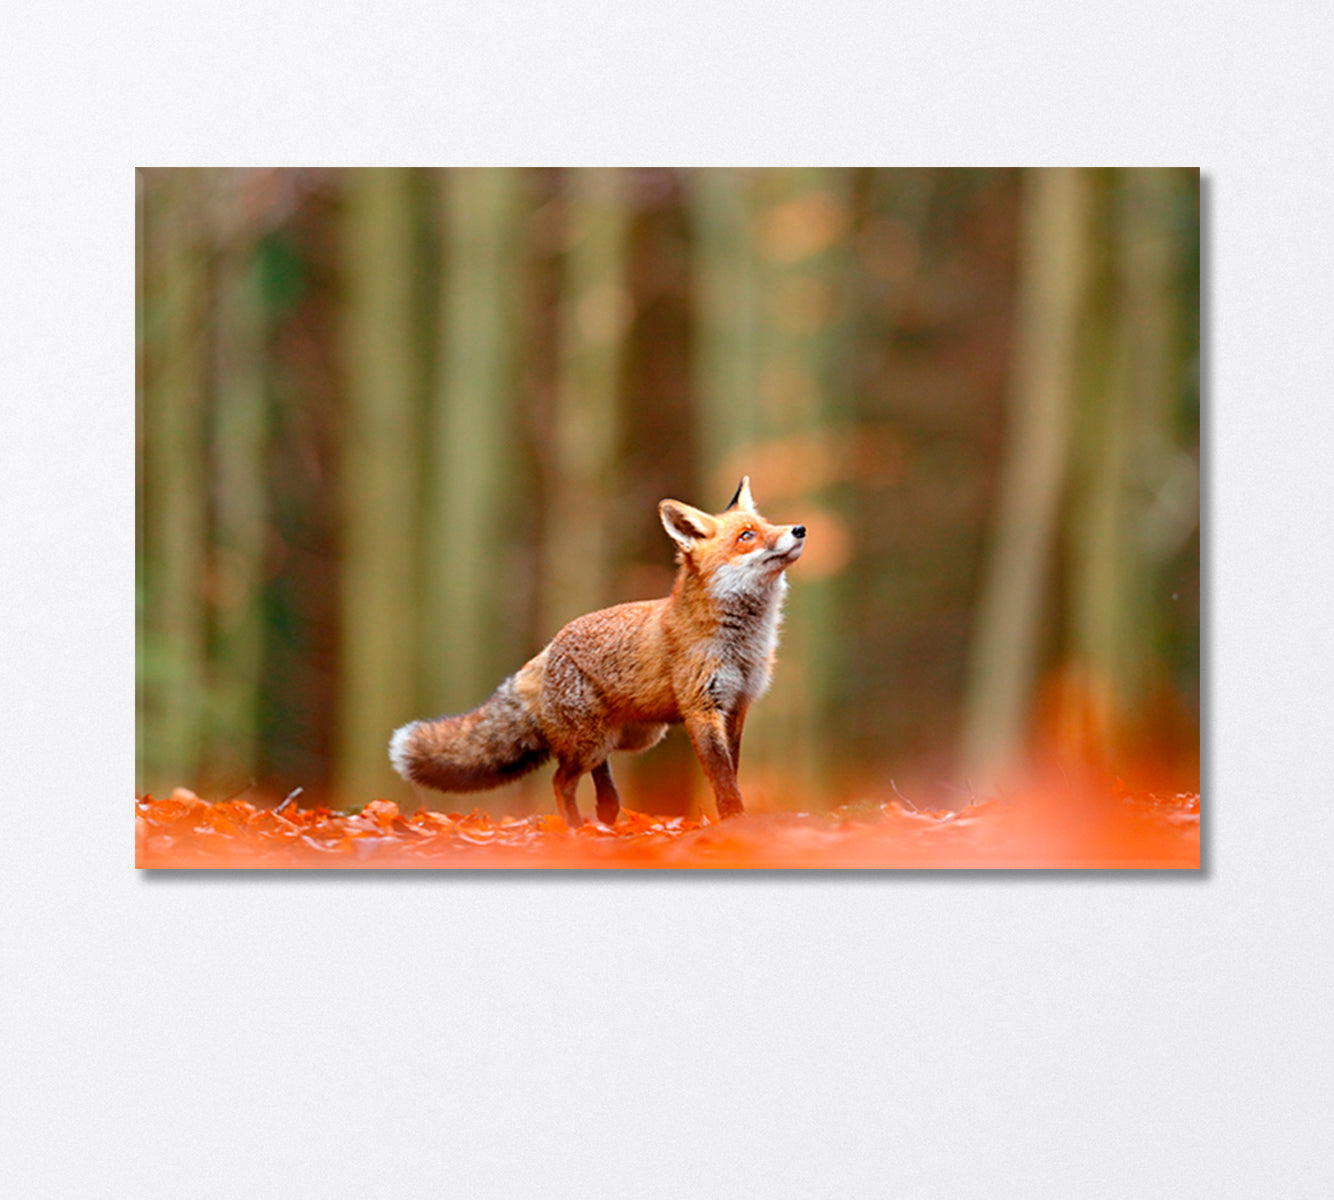 Red Fox Running in Orange Autumn Leaves Canvas Print-Canvas Print-CetArt-1 Panel-24x16 inches-CetArt